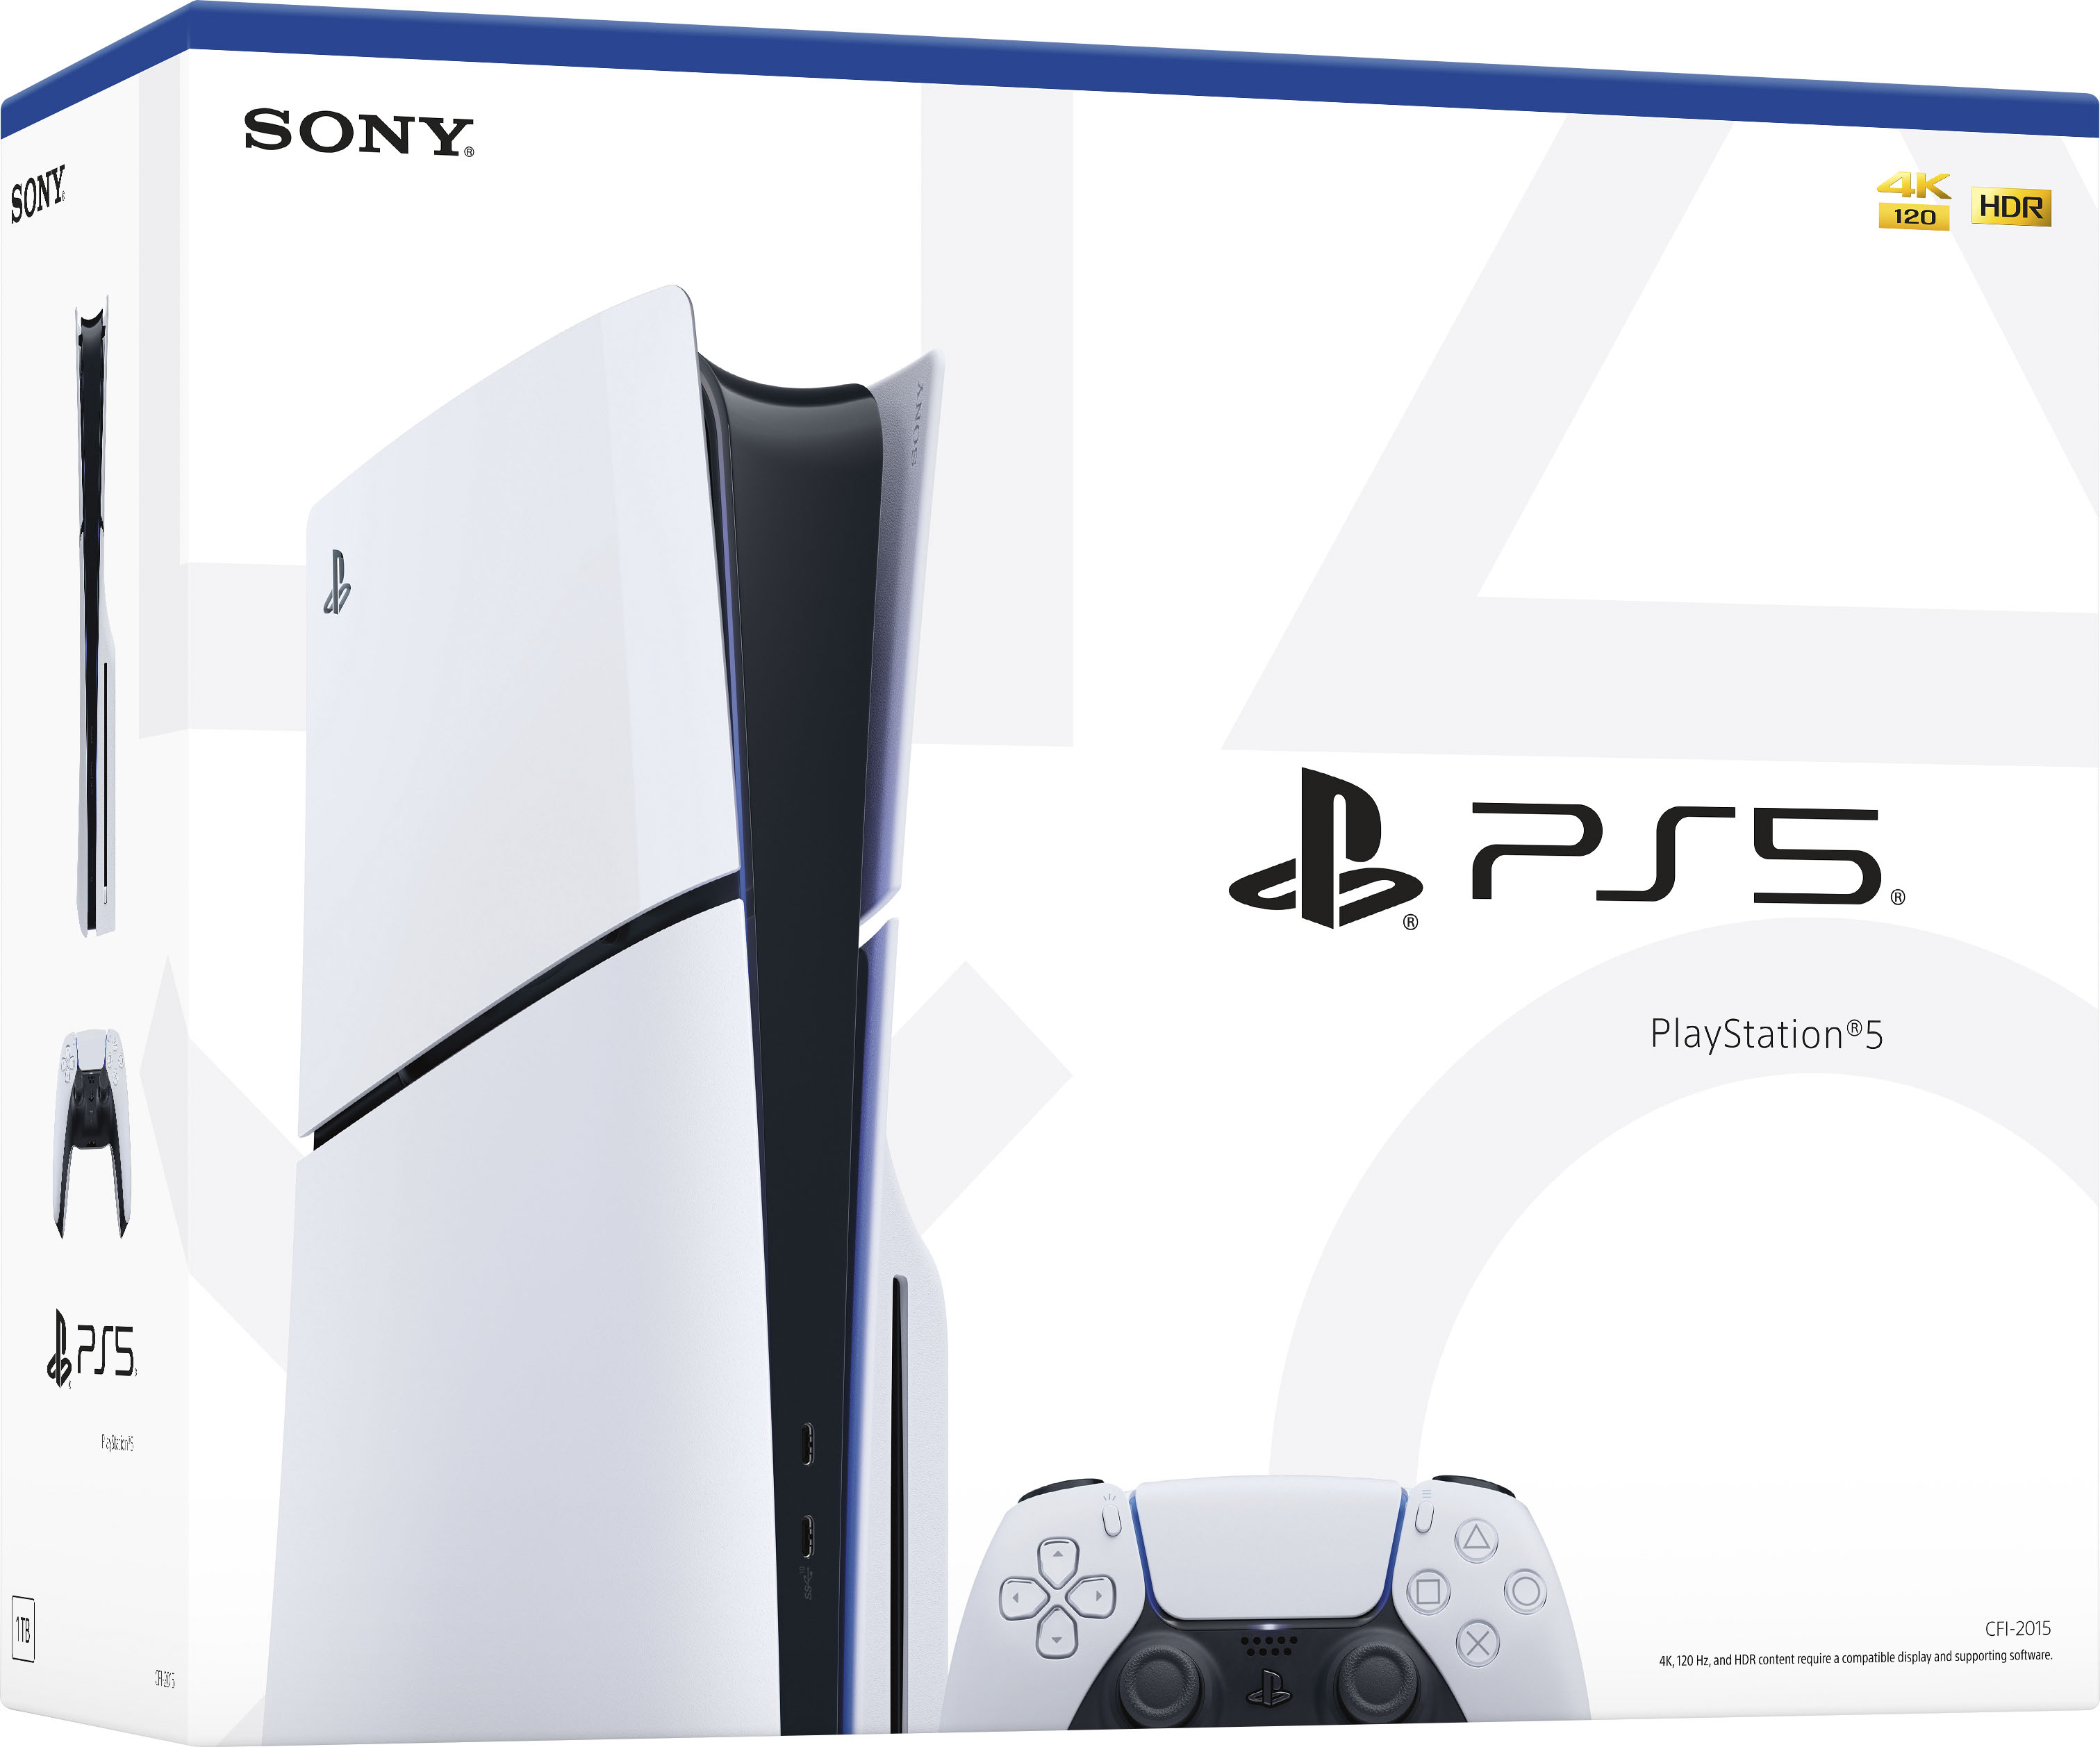 Sony PlayStation 5 - 1TB Standard Edition PS5